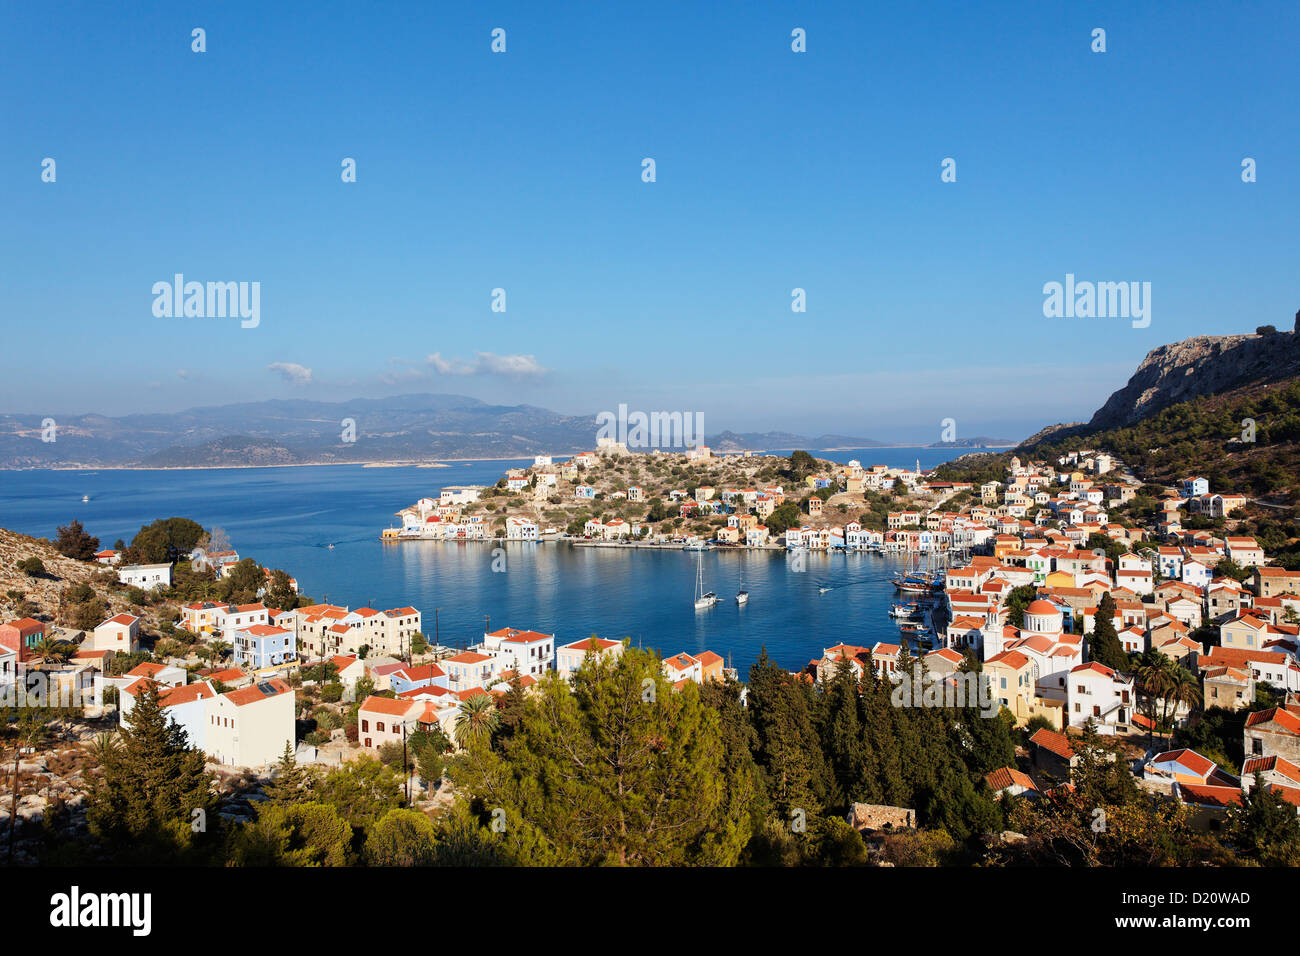 View of the seaport Kastelorizo Megiste, Dodecanese Islands, Greece, Europe Stock Photo